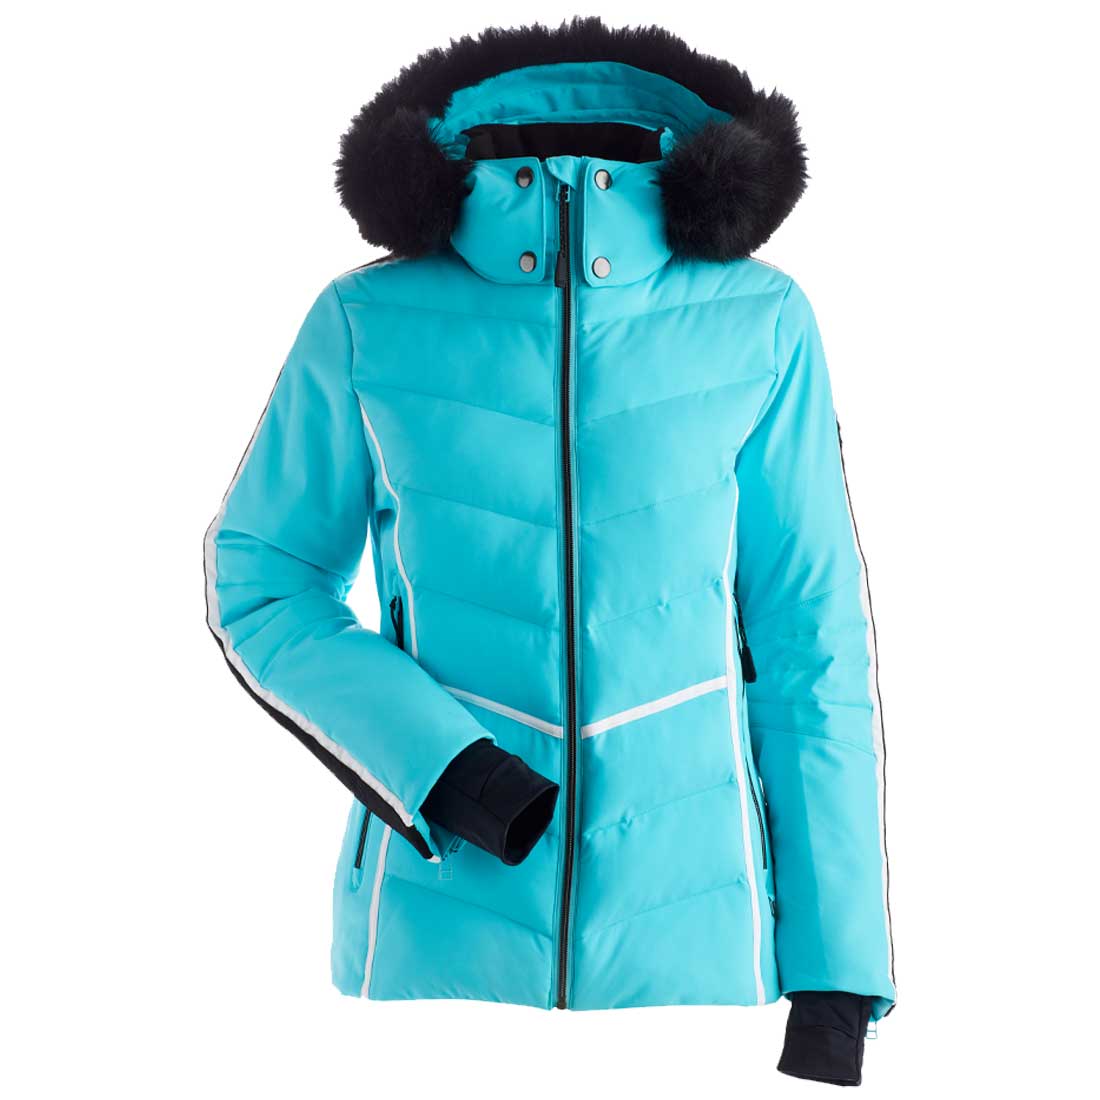 NILS Sundance White Faux Fur Jacket – Snowbound